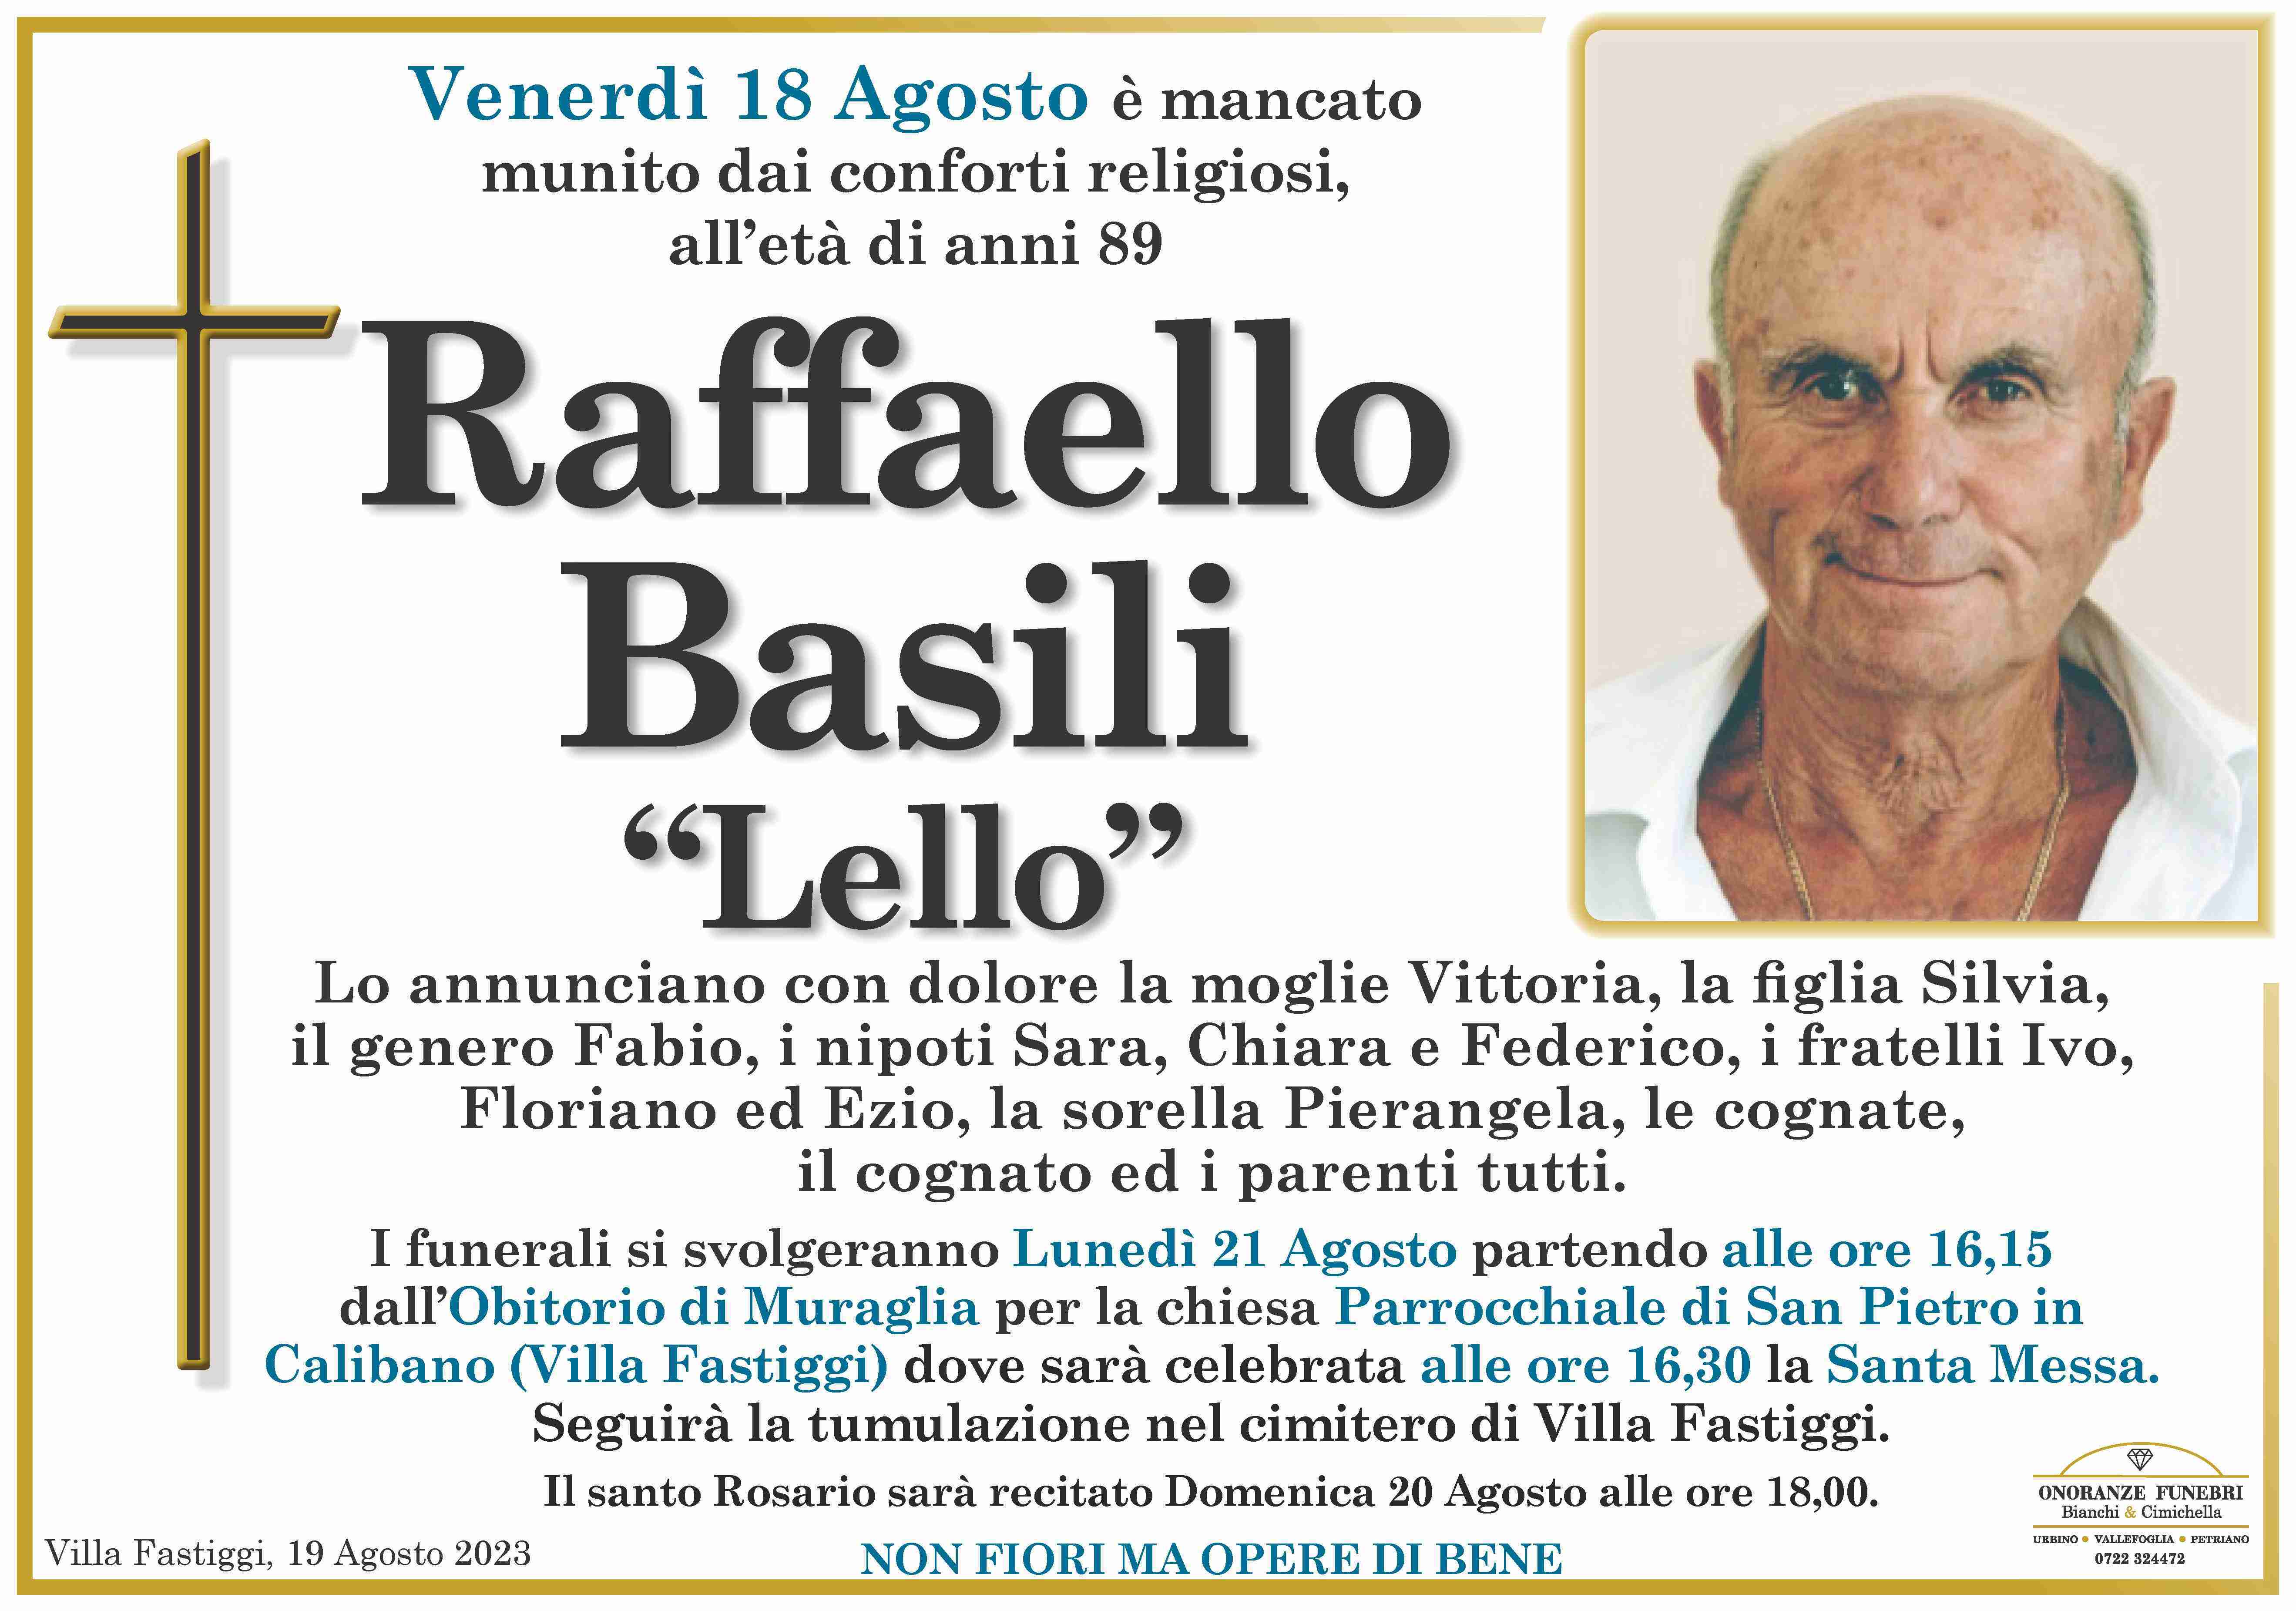 Raffaello Basili